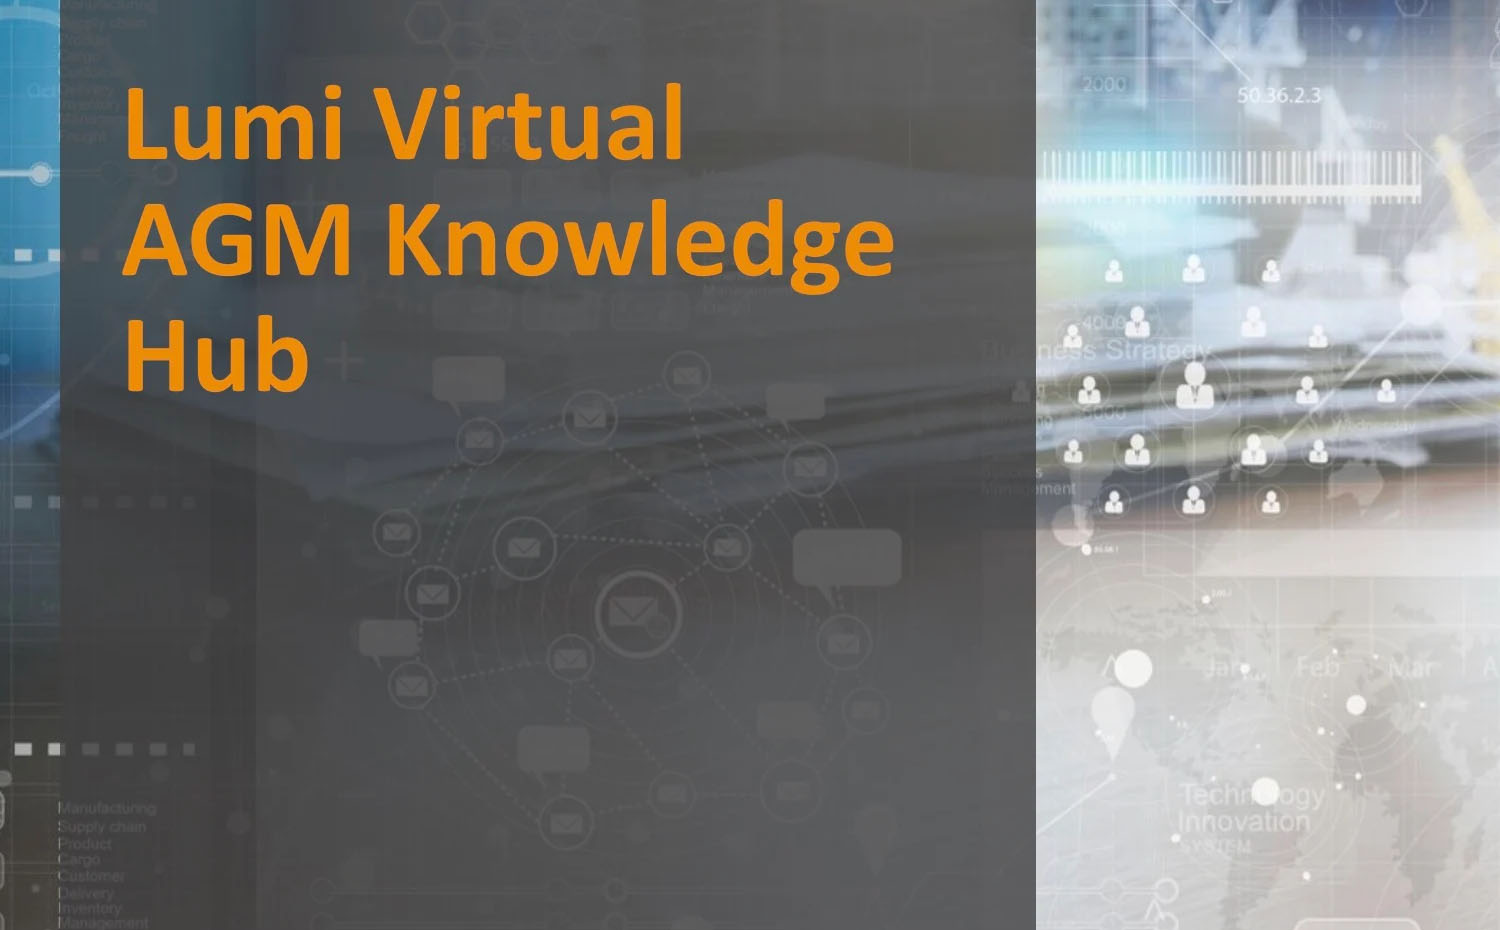 Lumi launches Virtual AGM Knowledge Hub